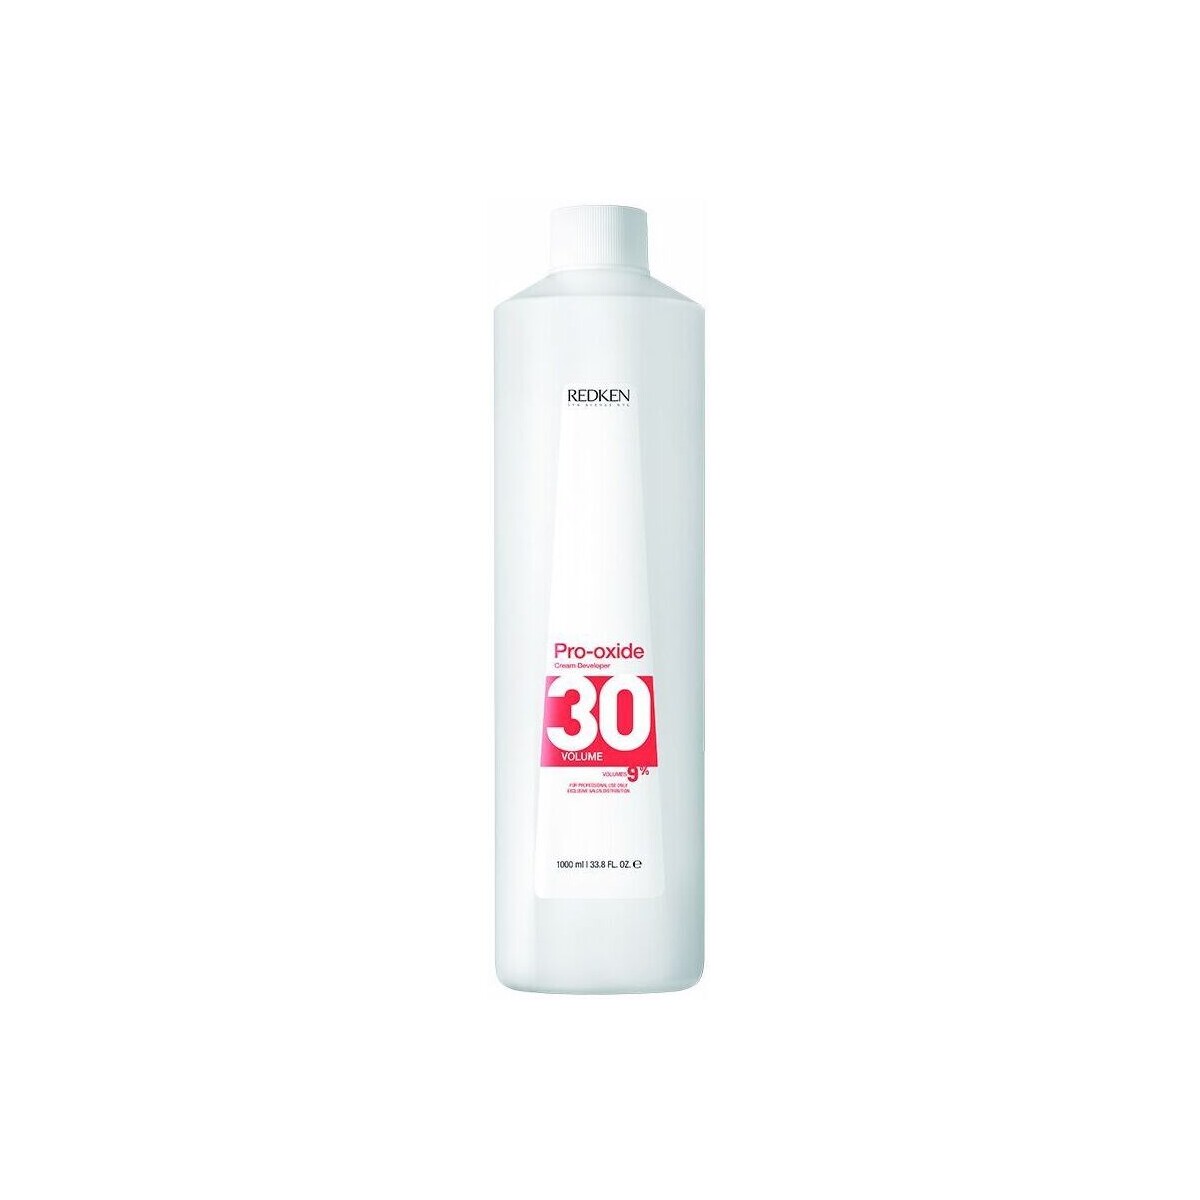 Bellezza Tinta Redken Pro-oxide Cream Developer 30 Vol 9% 